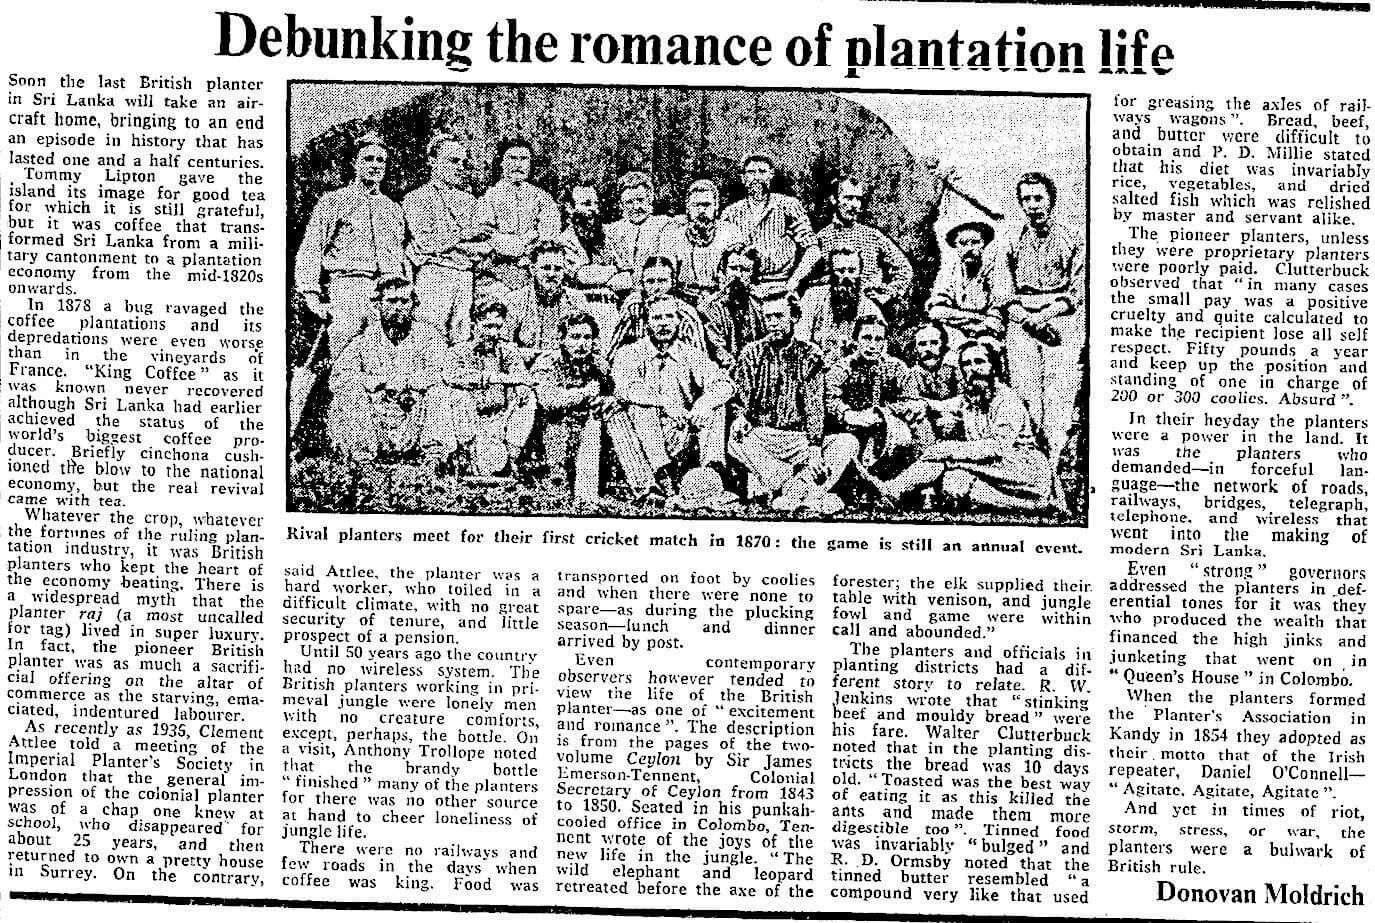 29.Debunking the romance of plantation life by Donovan Moldrich (c.1960s)